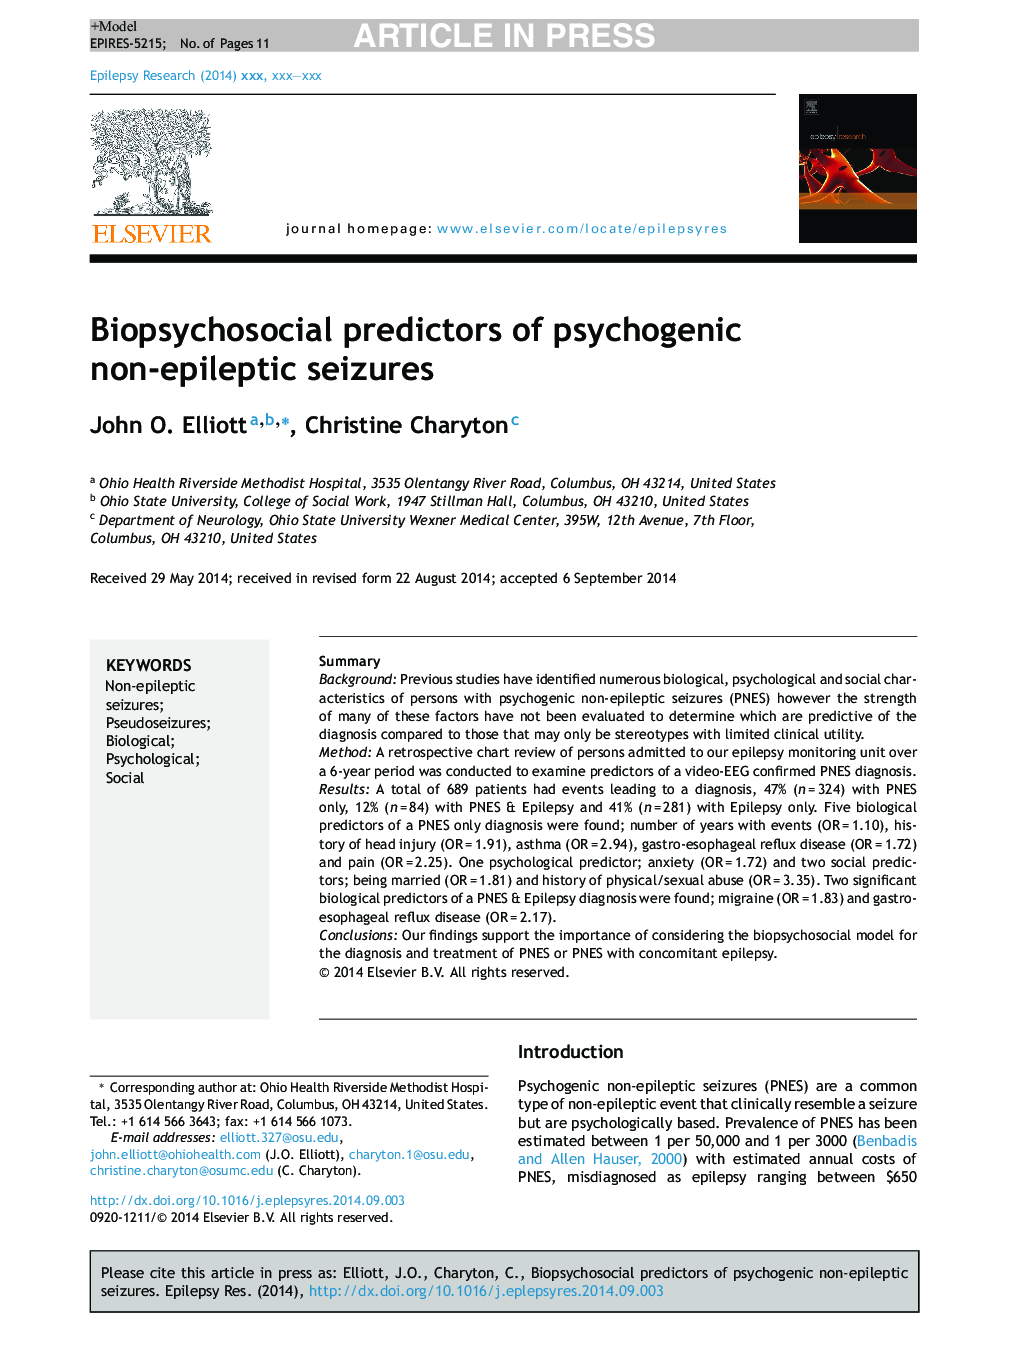 Biopsychosocial predictors of psychogenic non-epileptic seizures